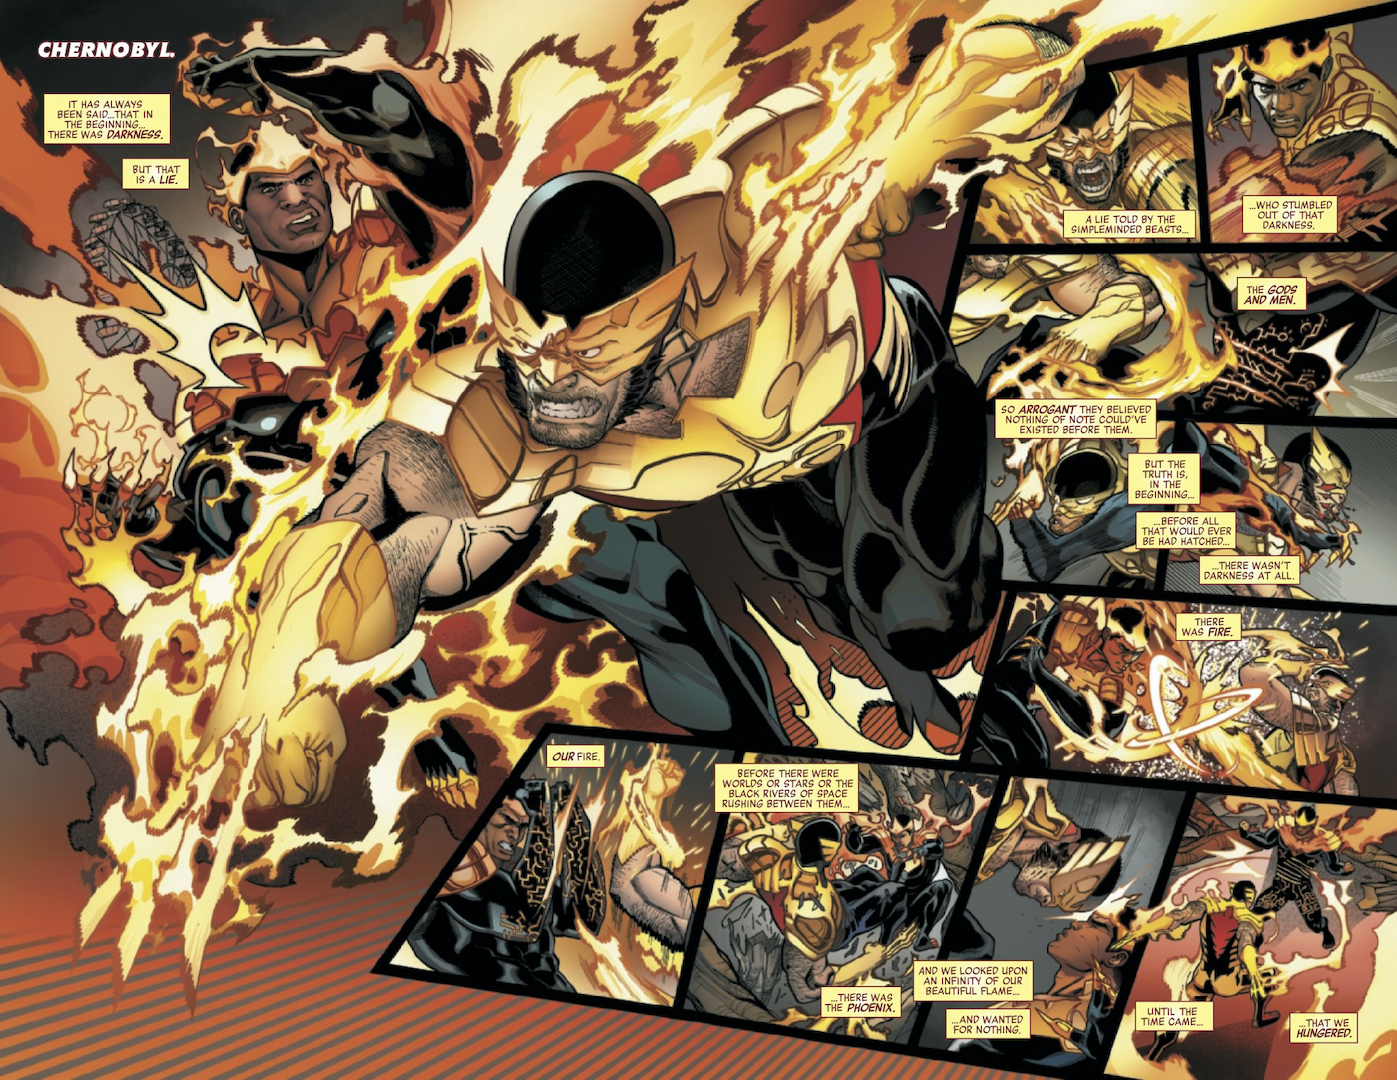 Página de Avengers # 43